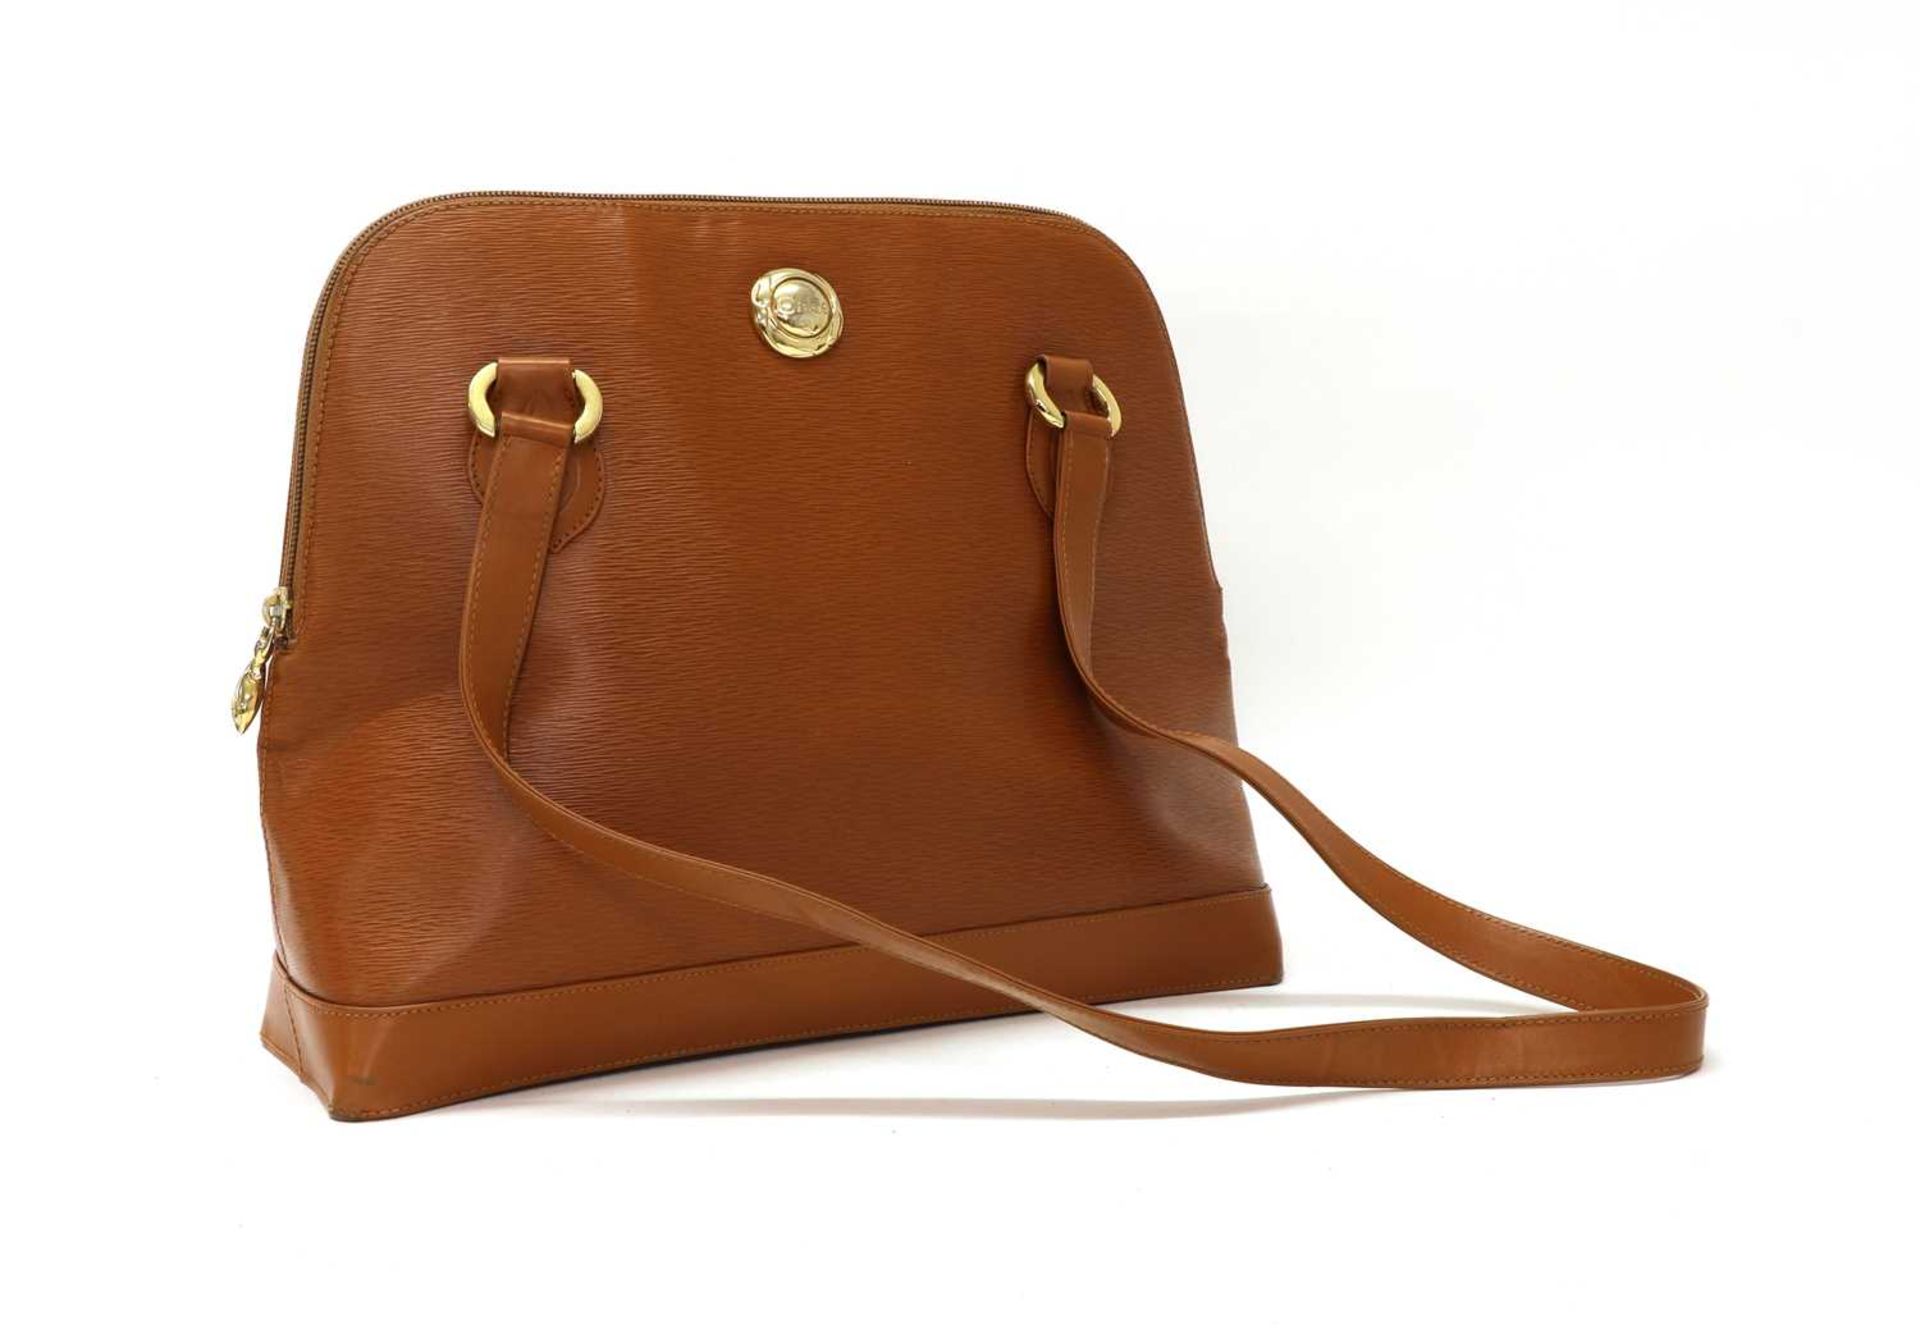 A Chloe tan leather shoulder bag,